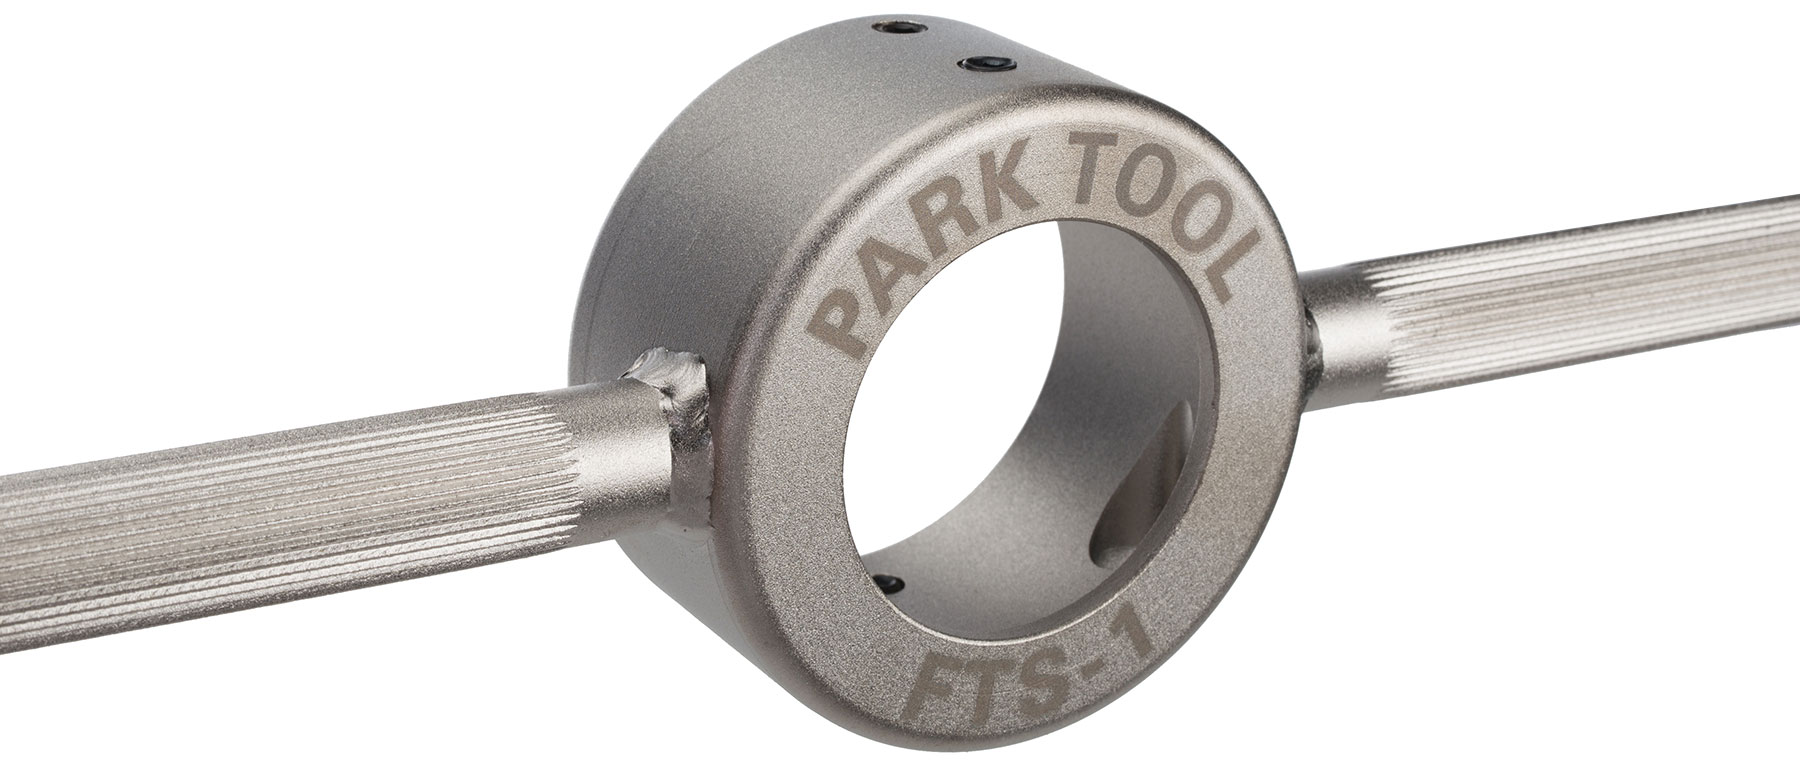 Park Tool FTS-1 Fork Threading Set